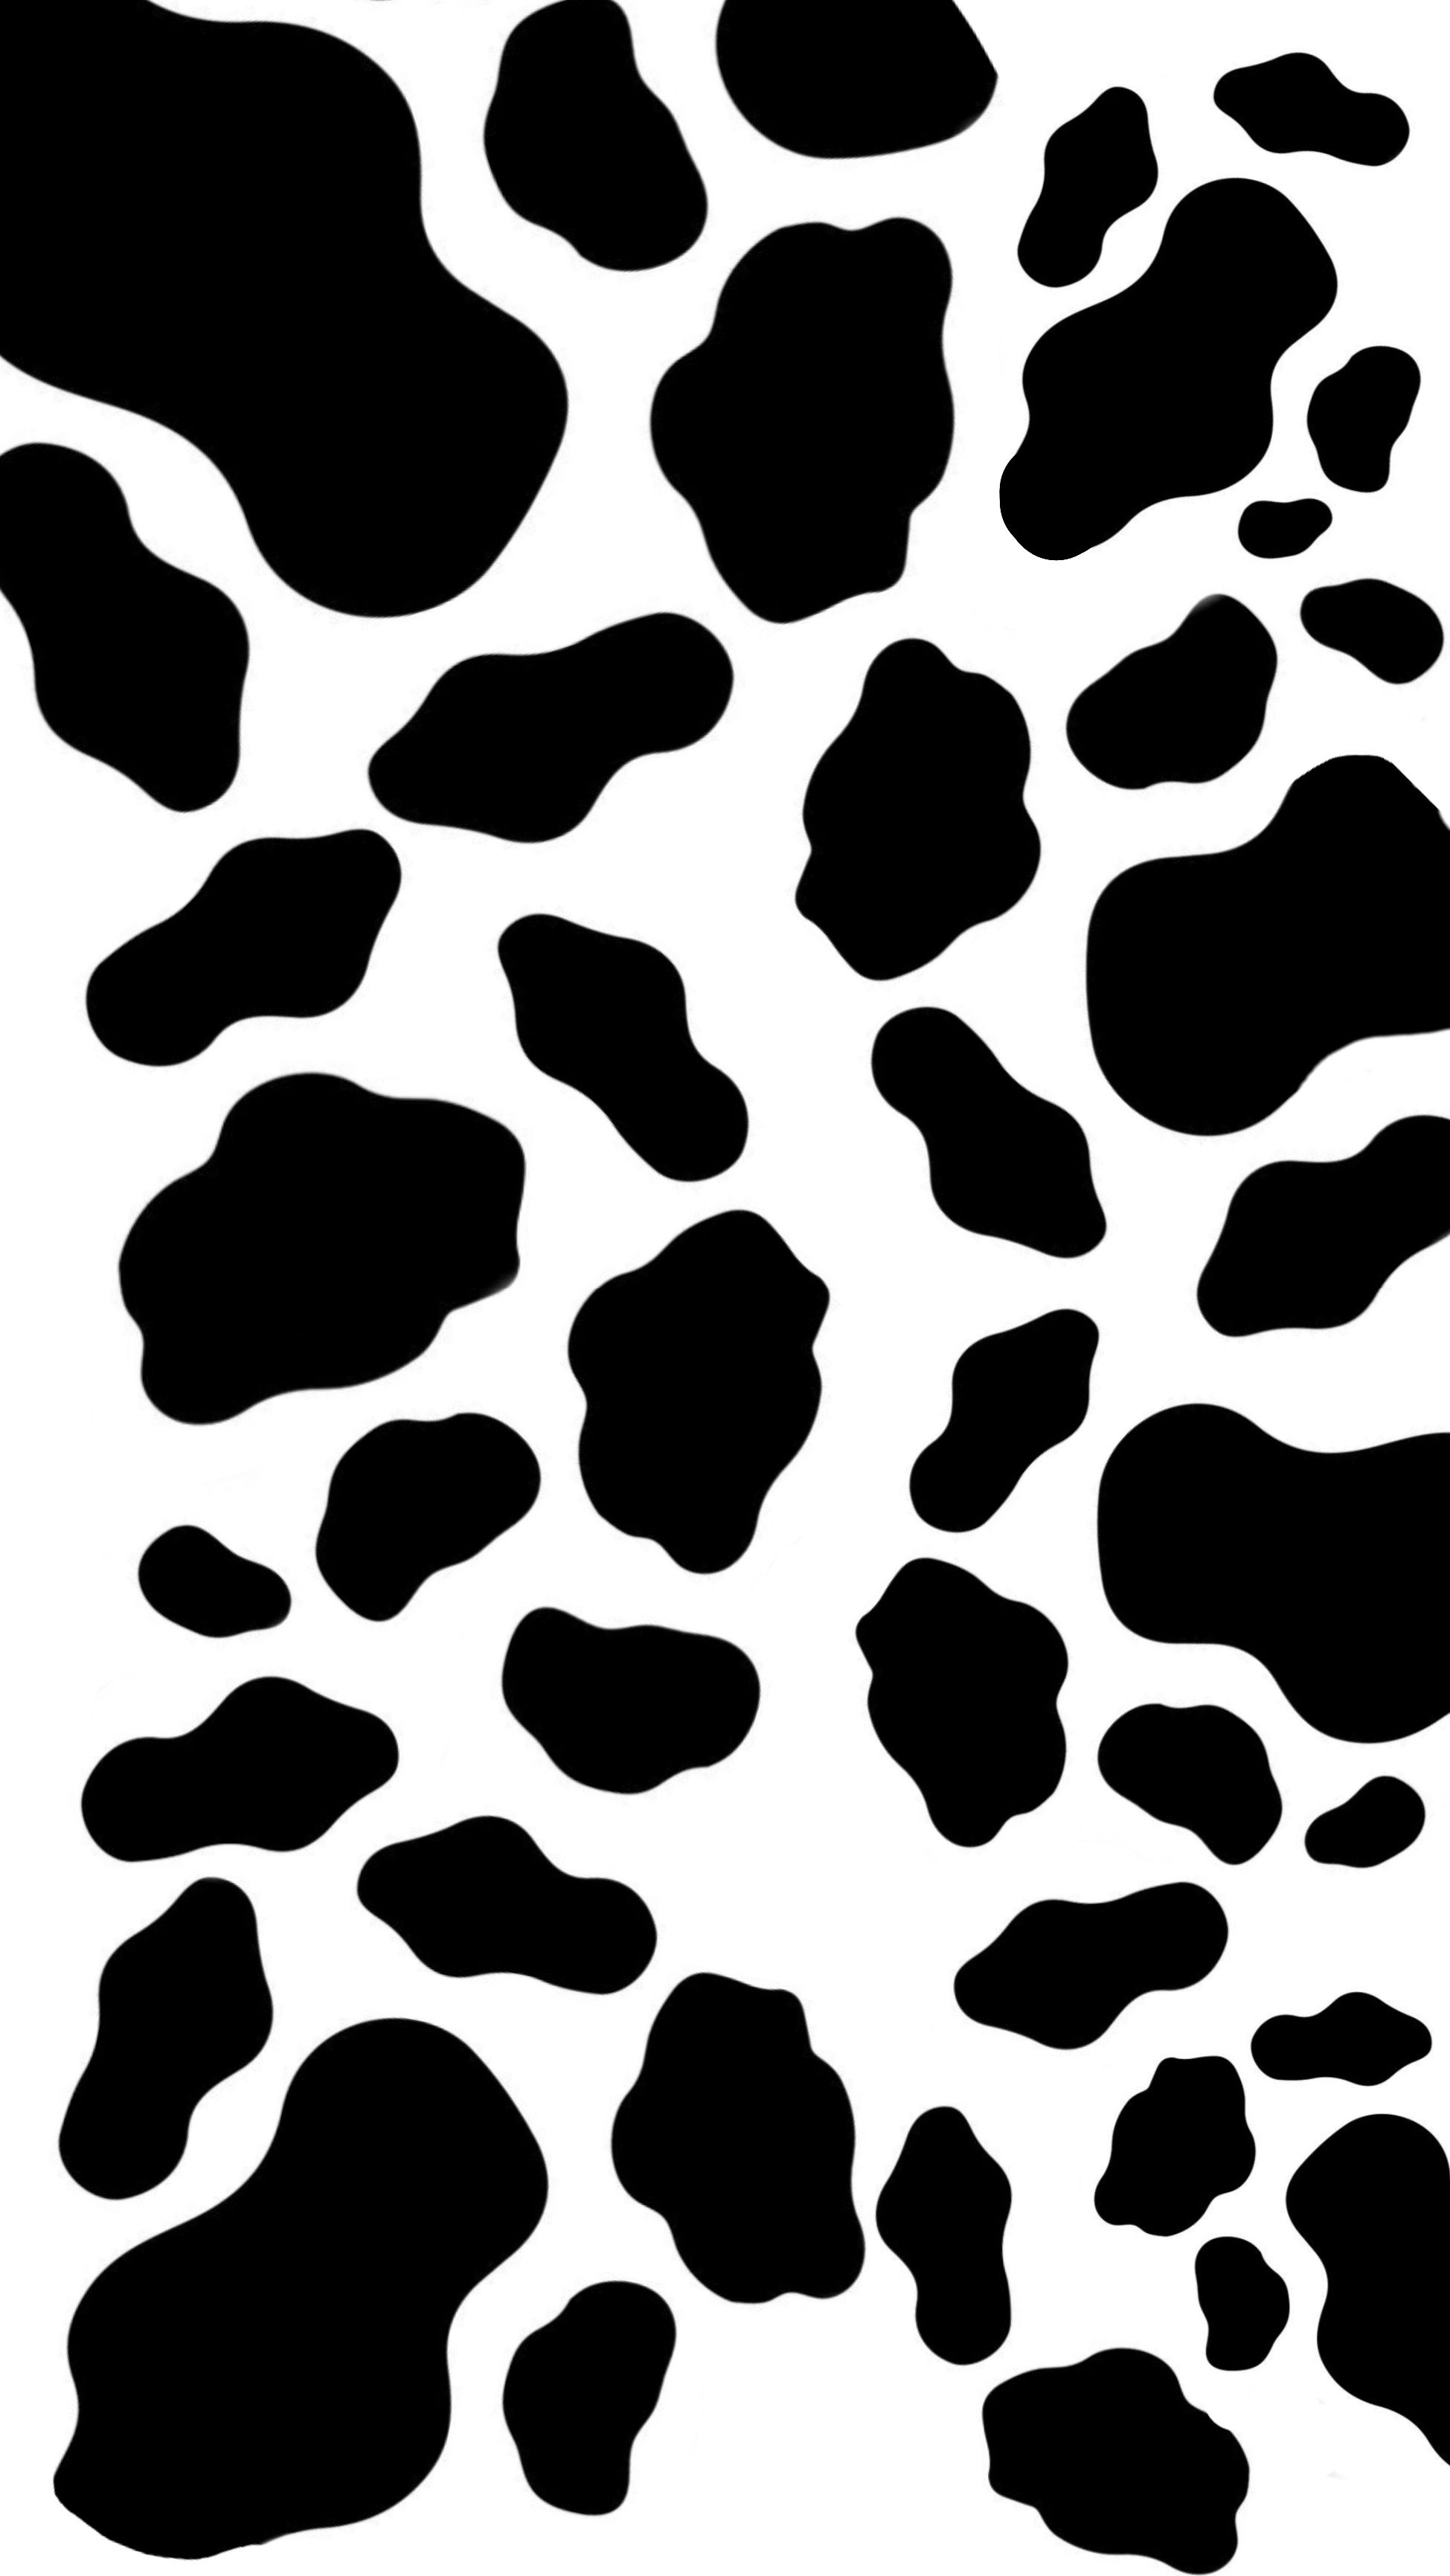 Cow print cow print wallpaper cow wallpaper print wallpaper